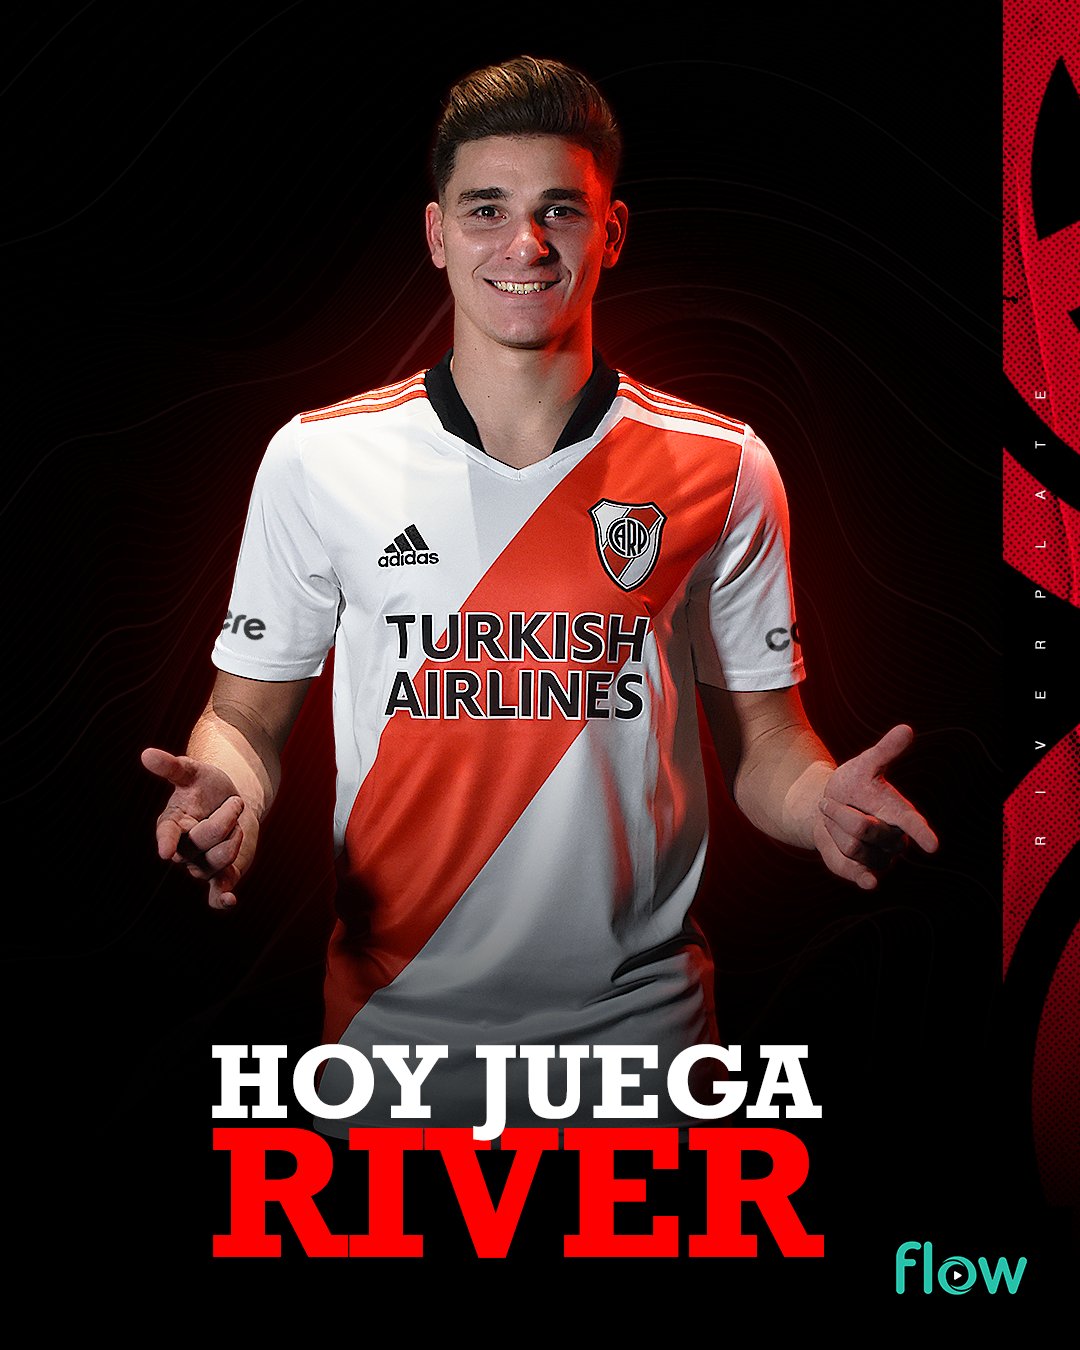 revolución también escala River Plate on Twitter: "¡HOY JUEGA RIVER! ⚪🔴⚪ https://t.co/zhkKqzP0DW" /  Twitter